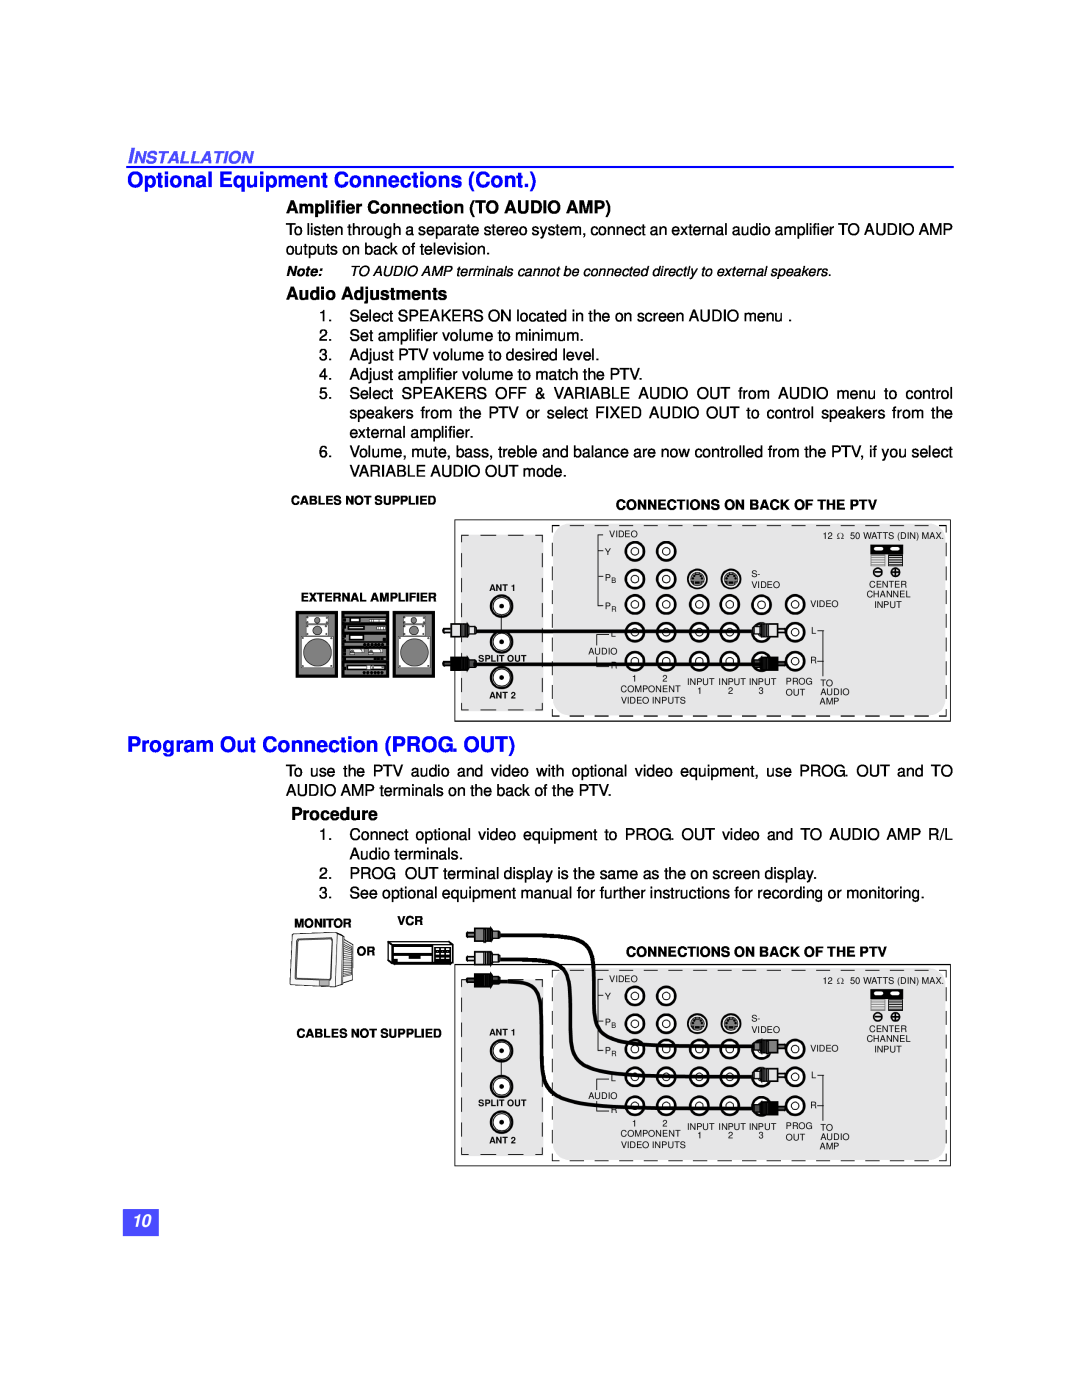 Panasonic PT-47WX49 Optional Equipment Connections Cont, Program Out Connection PROG. OUT, Installation, Audio Adjustments 